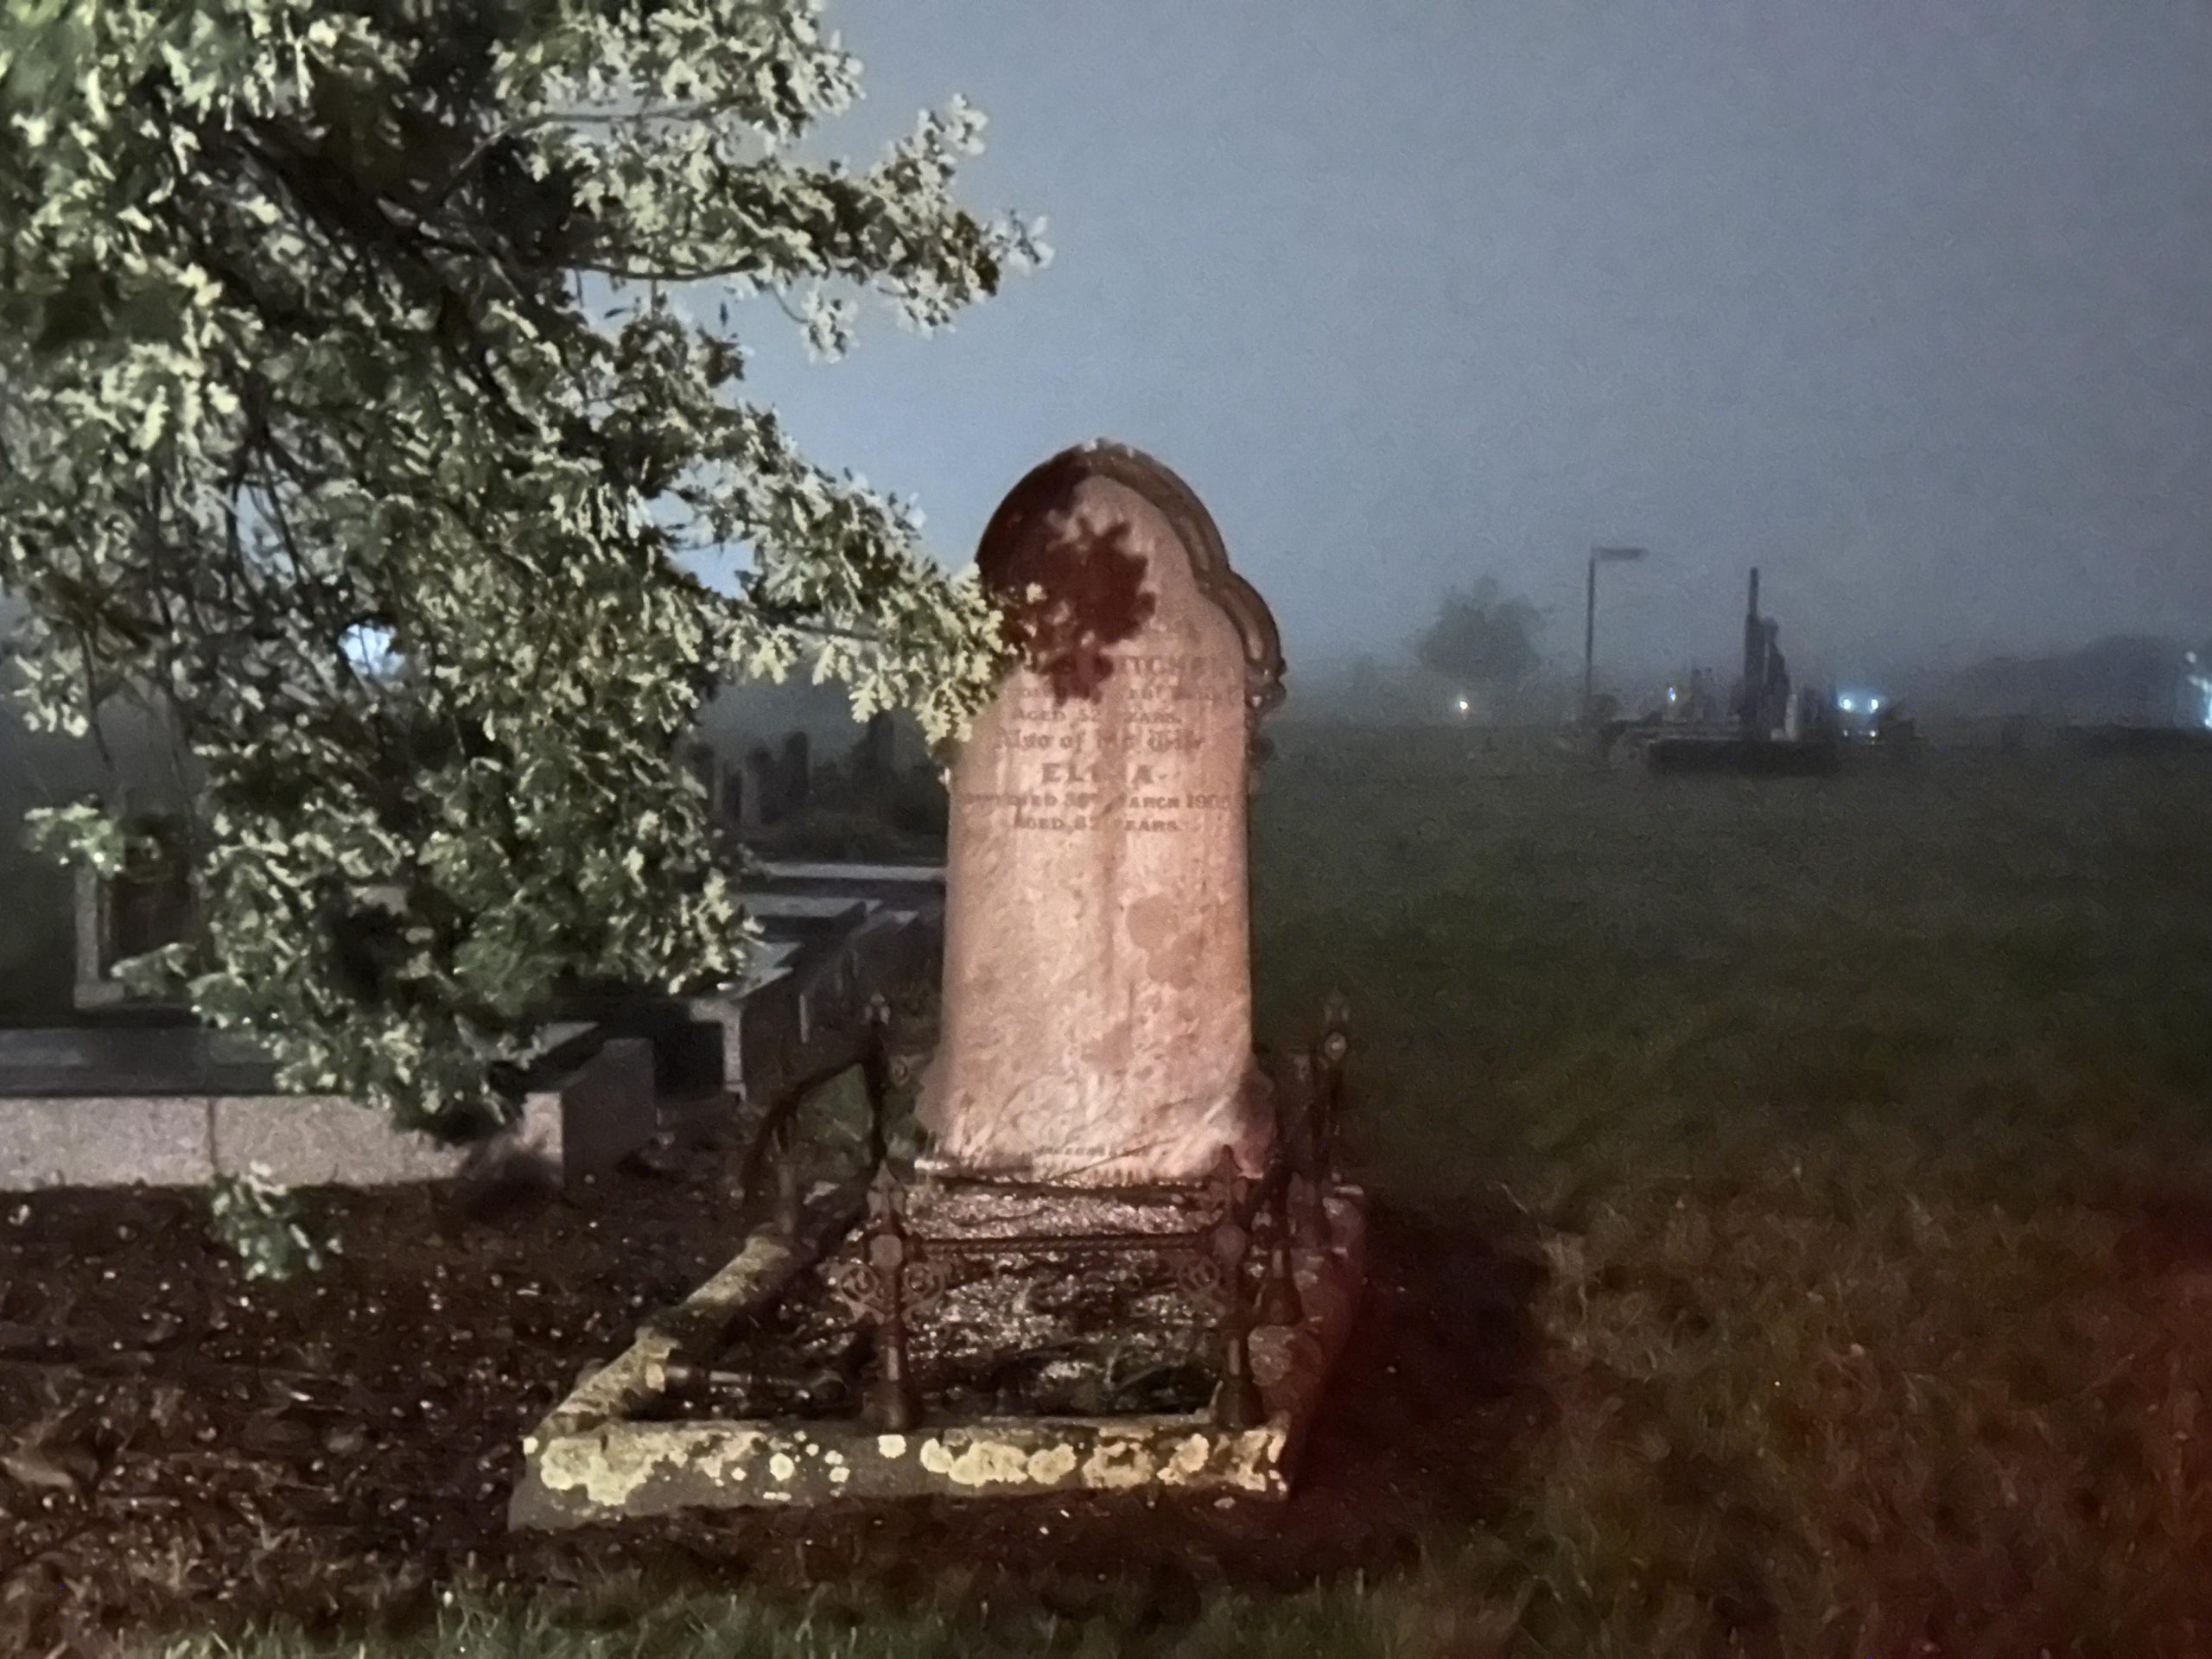 Sunbury Cemetery on a misty night. Photo by Dave White.